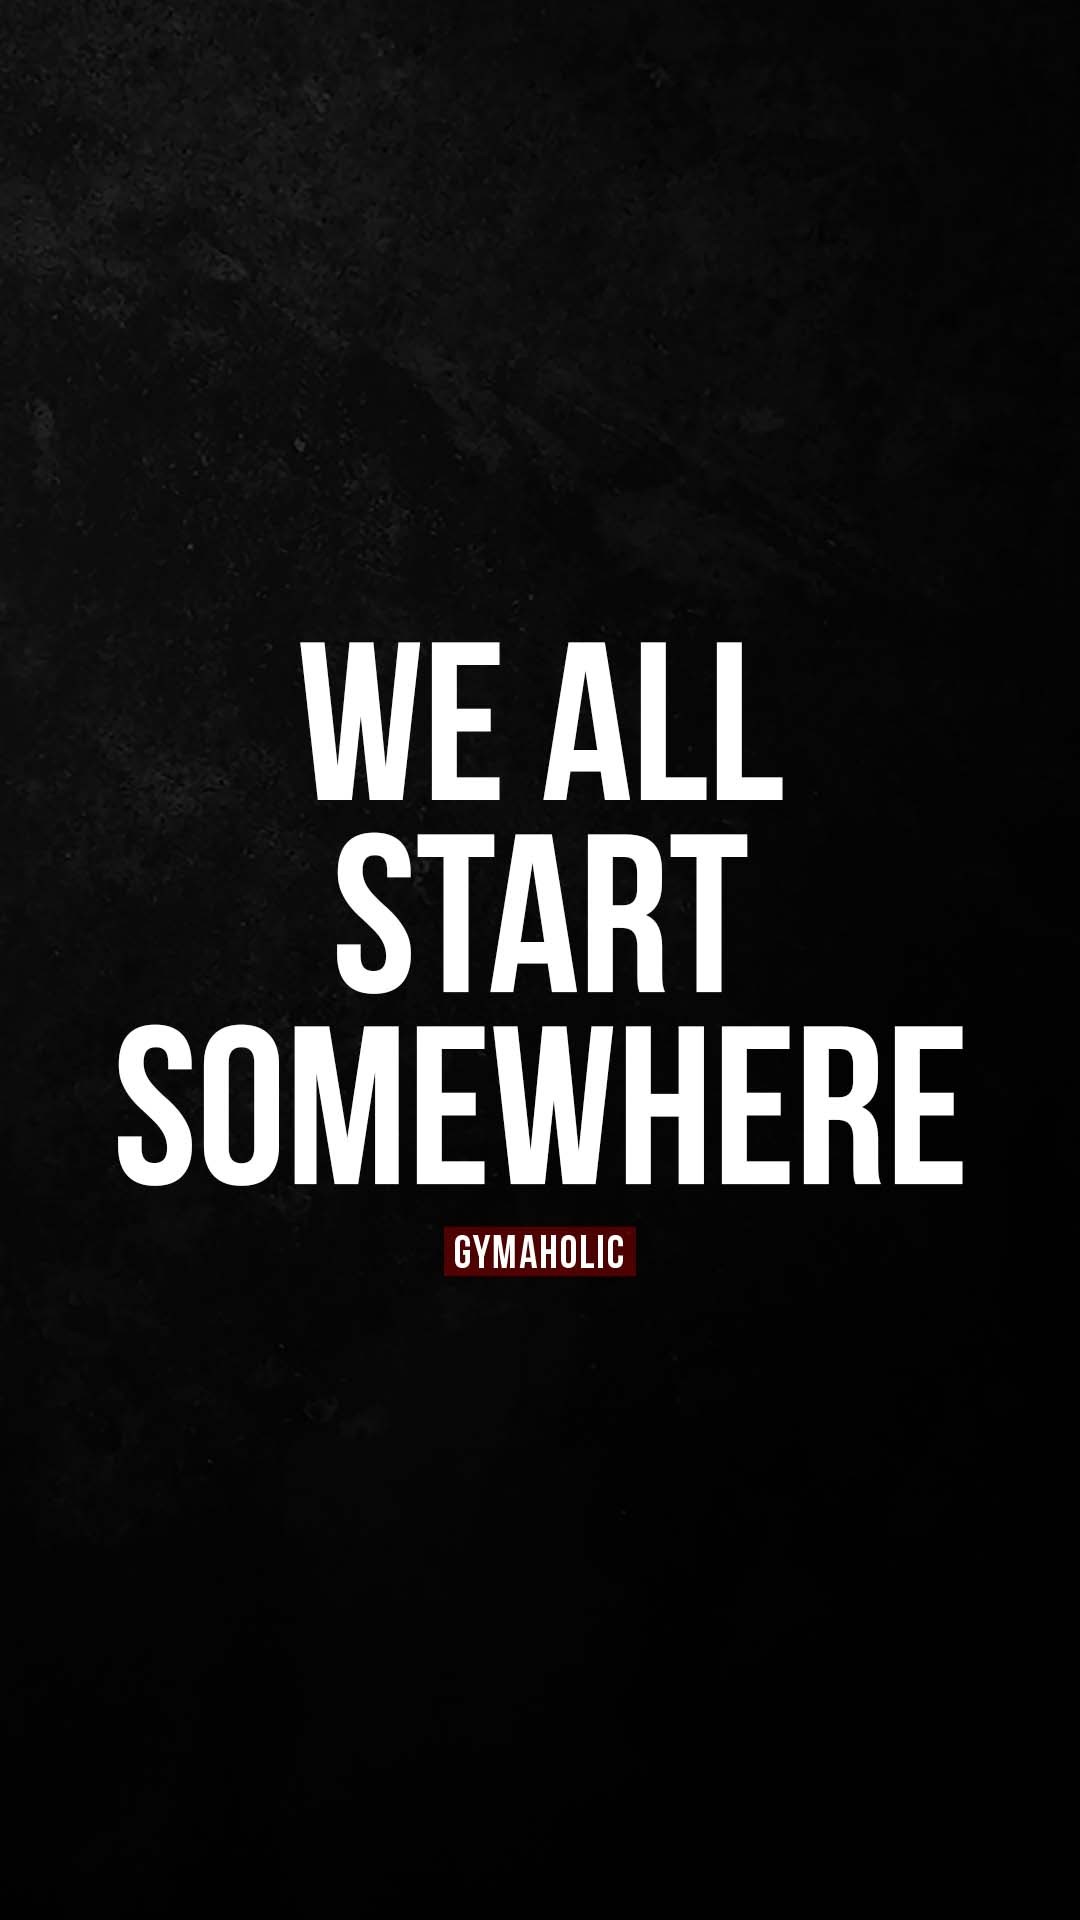 We all start somewhere